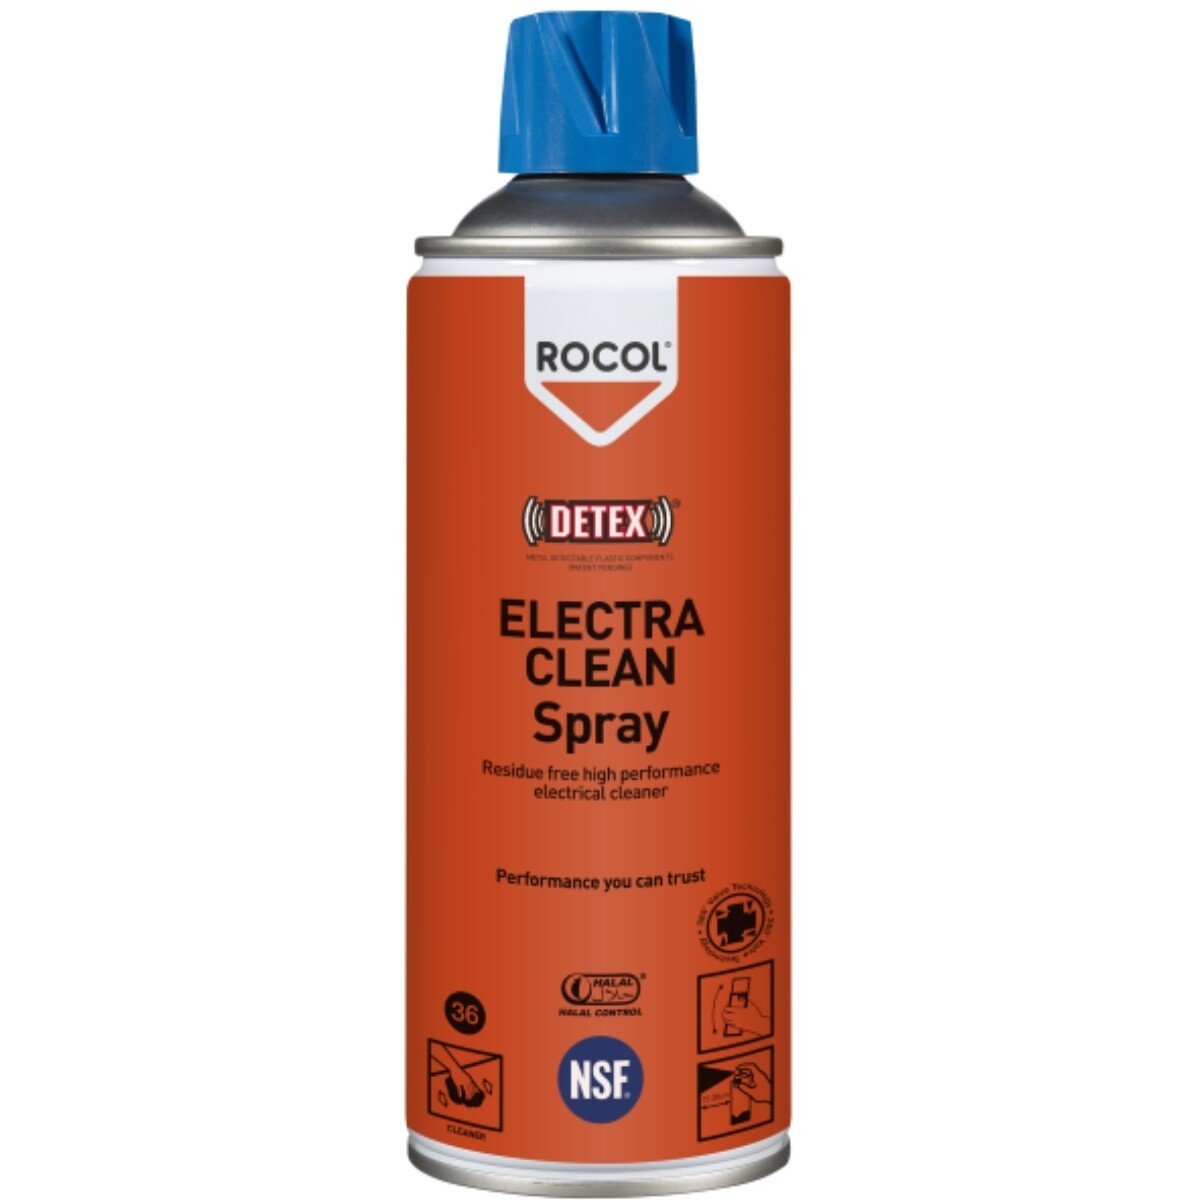 Rocol electra cleaner spray电器清洁喷剂